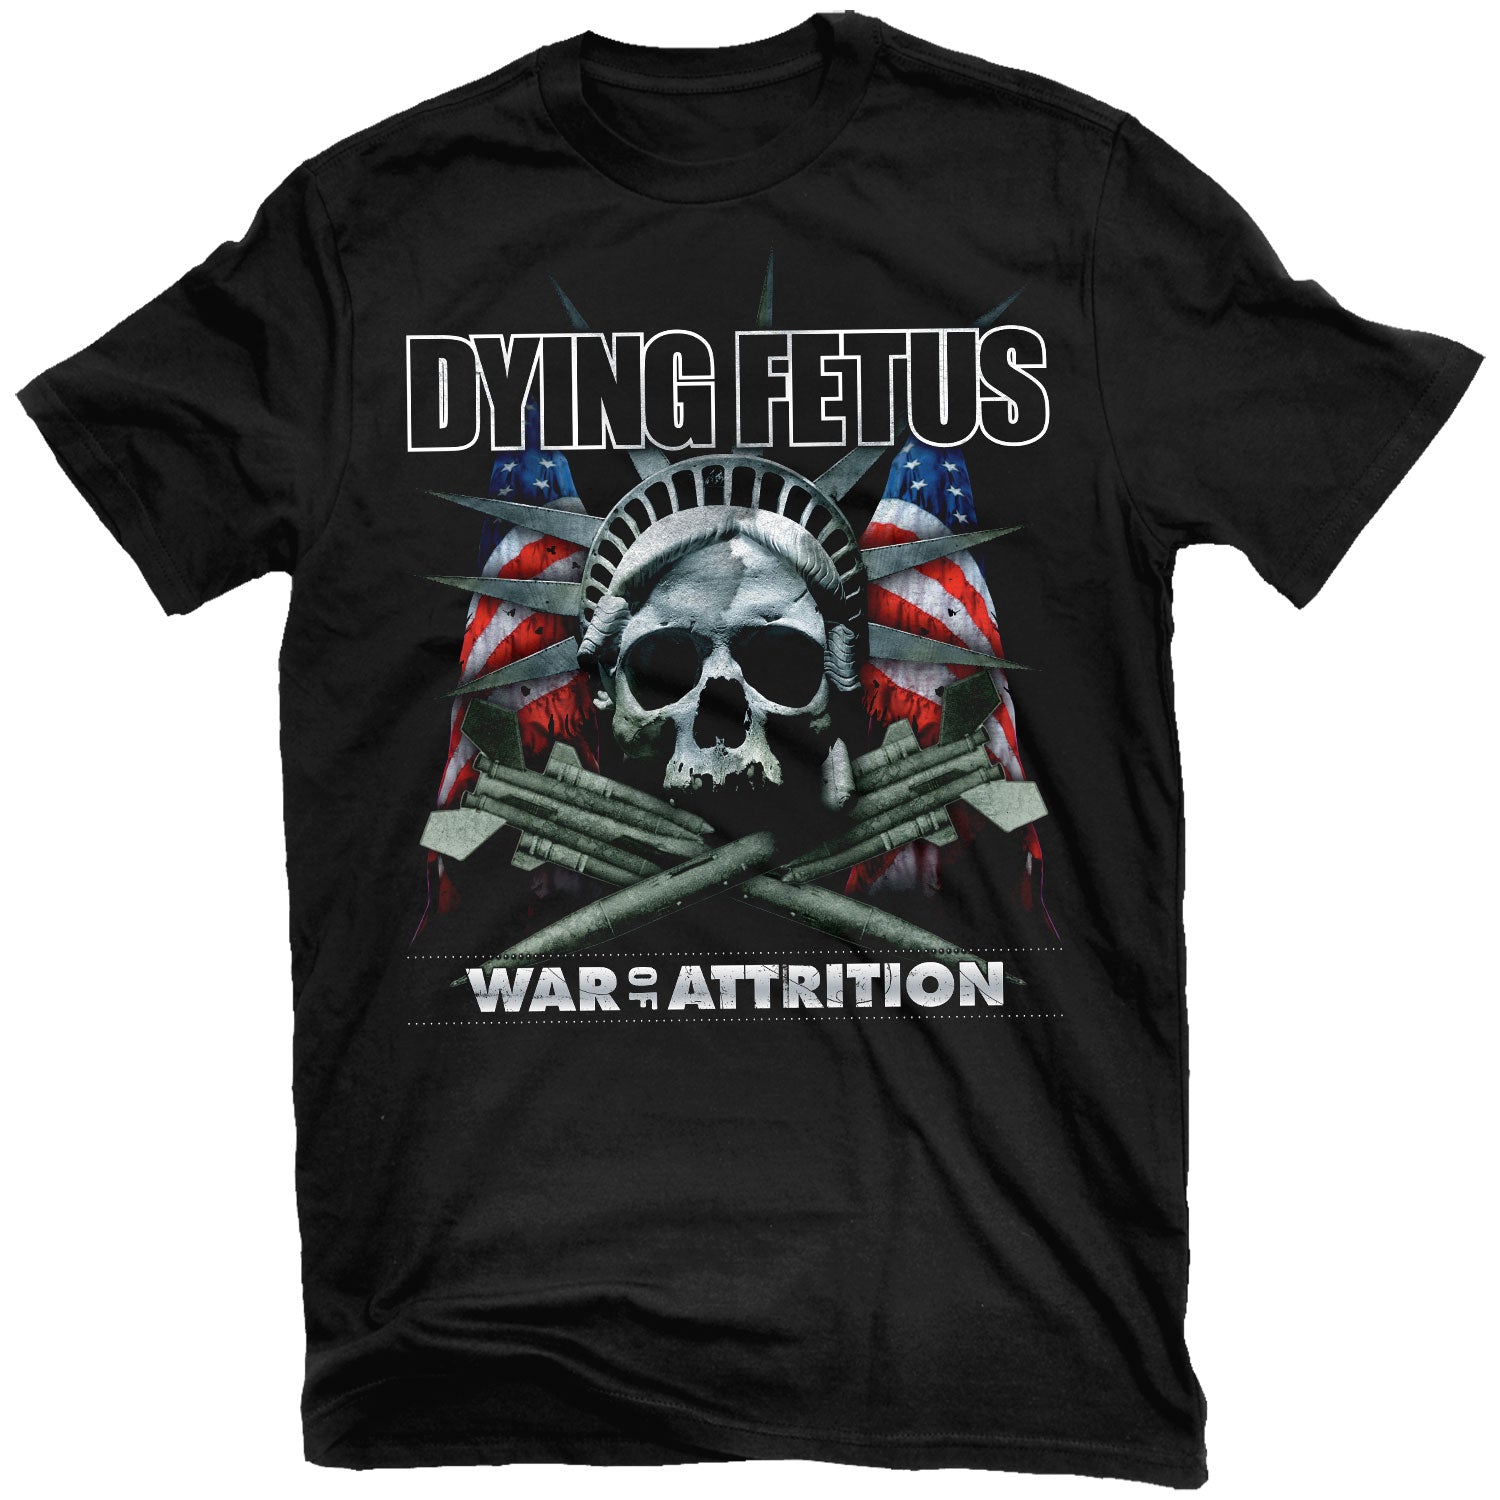 Dying Fetus "War of Attrition" T-Shirt